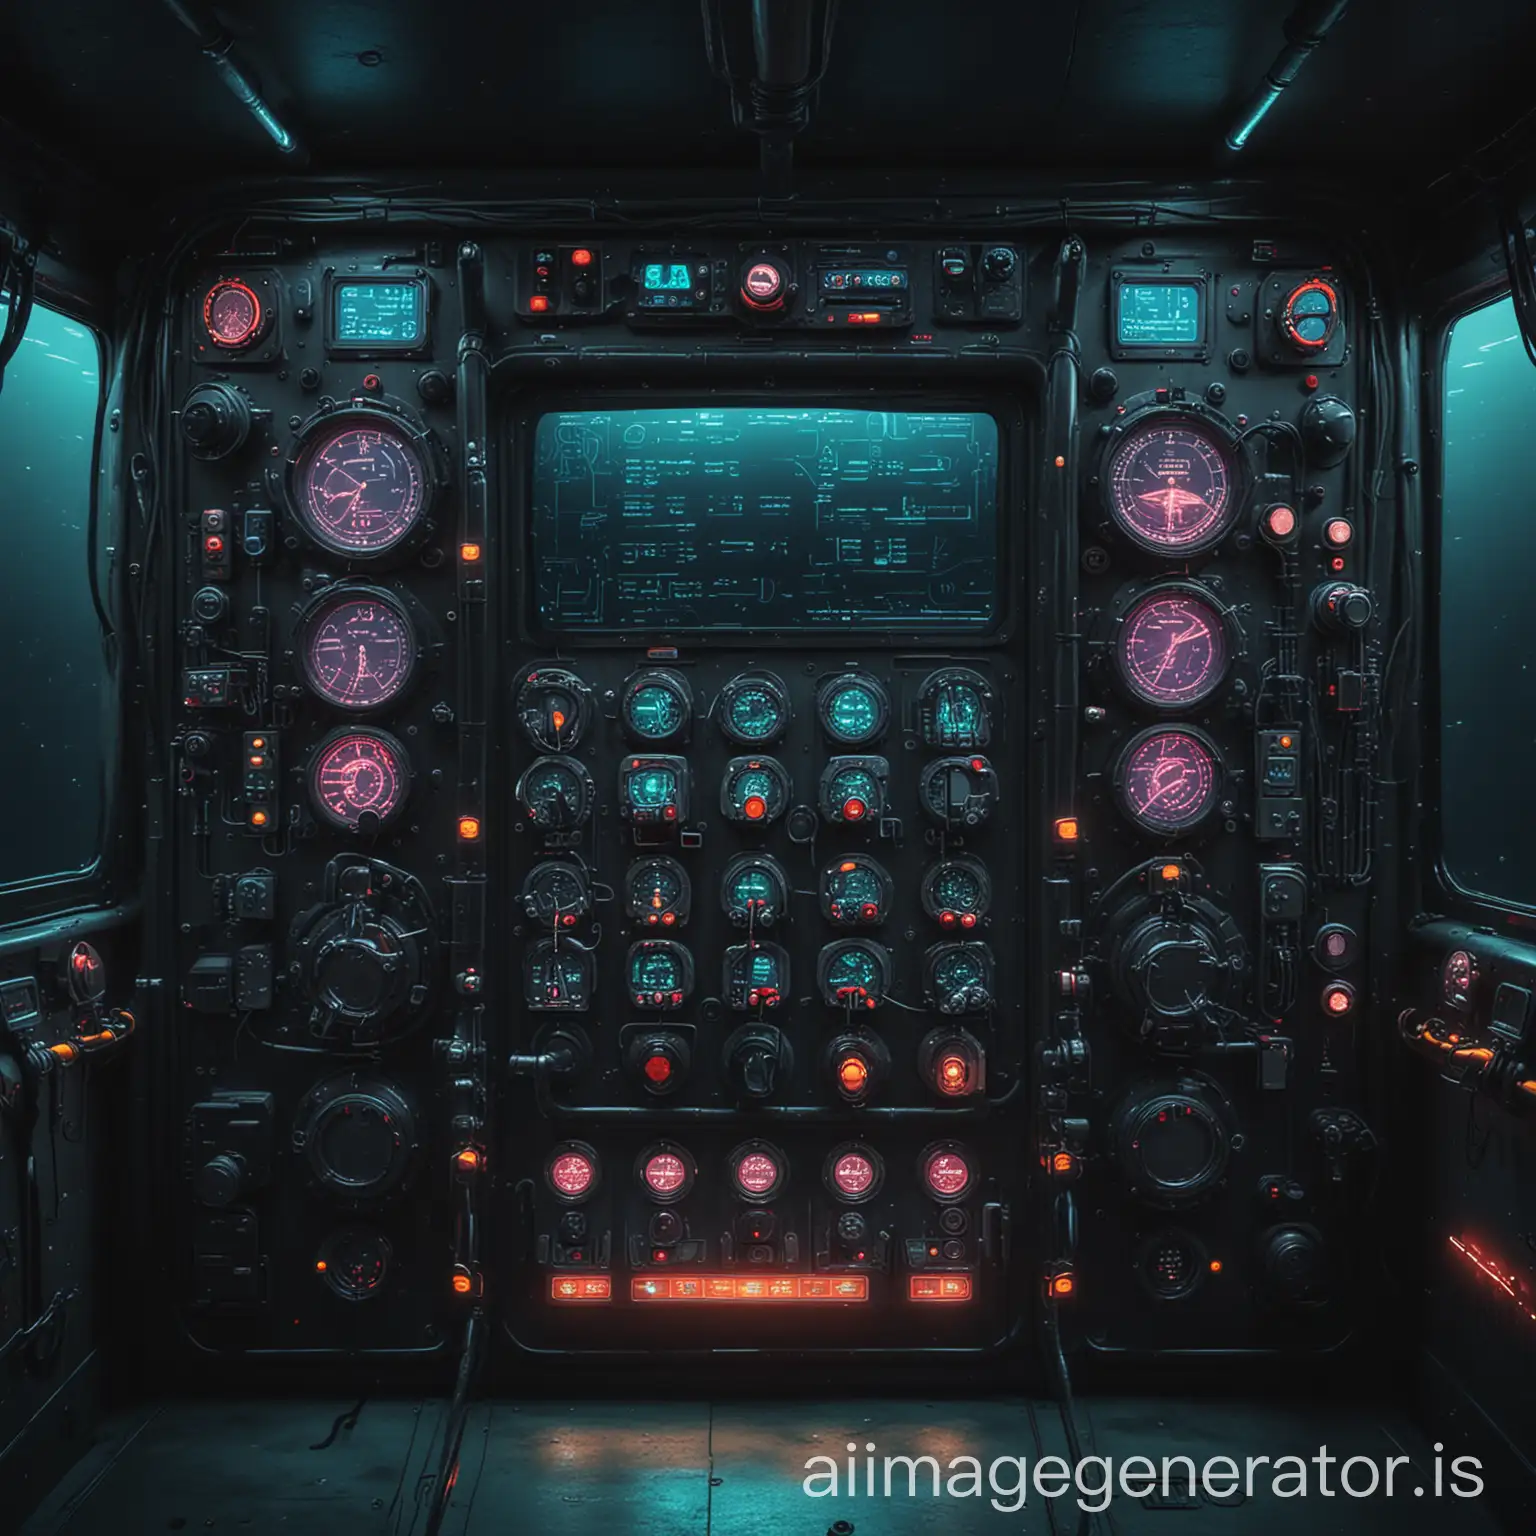 Futuristic-Minimalist-Submarine-Control-Panel-with-Neon-Colors